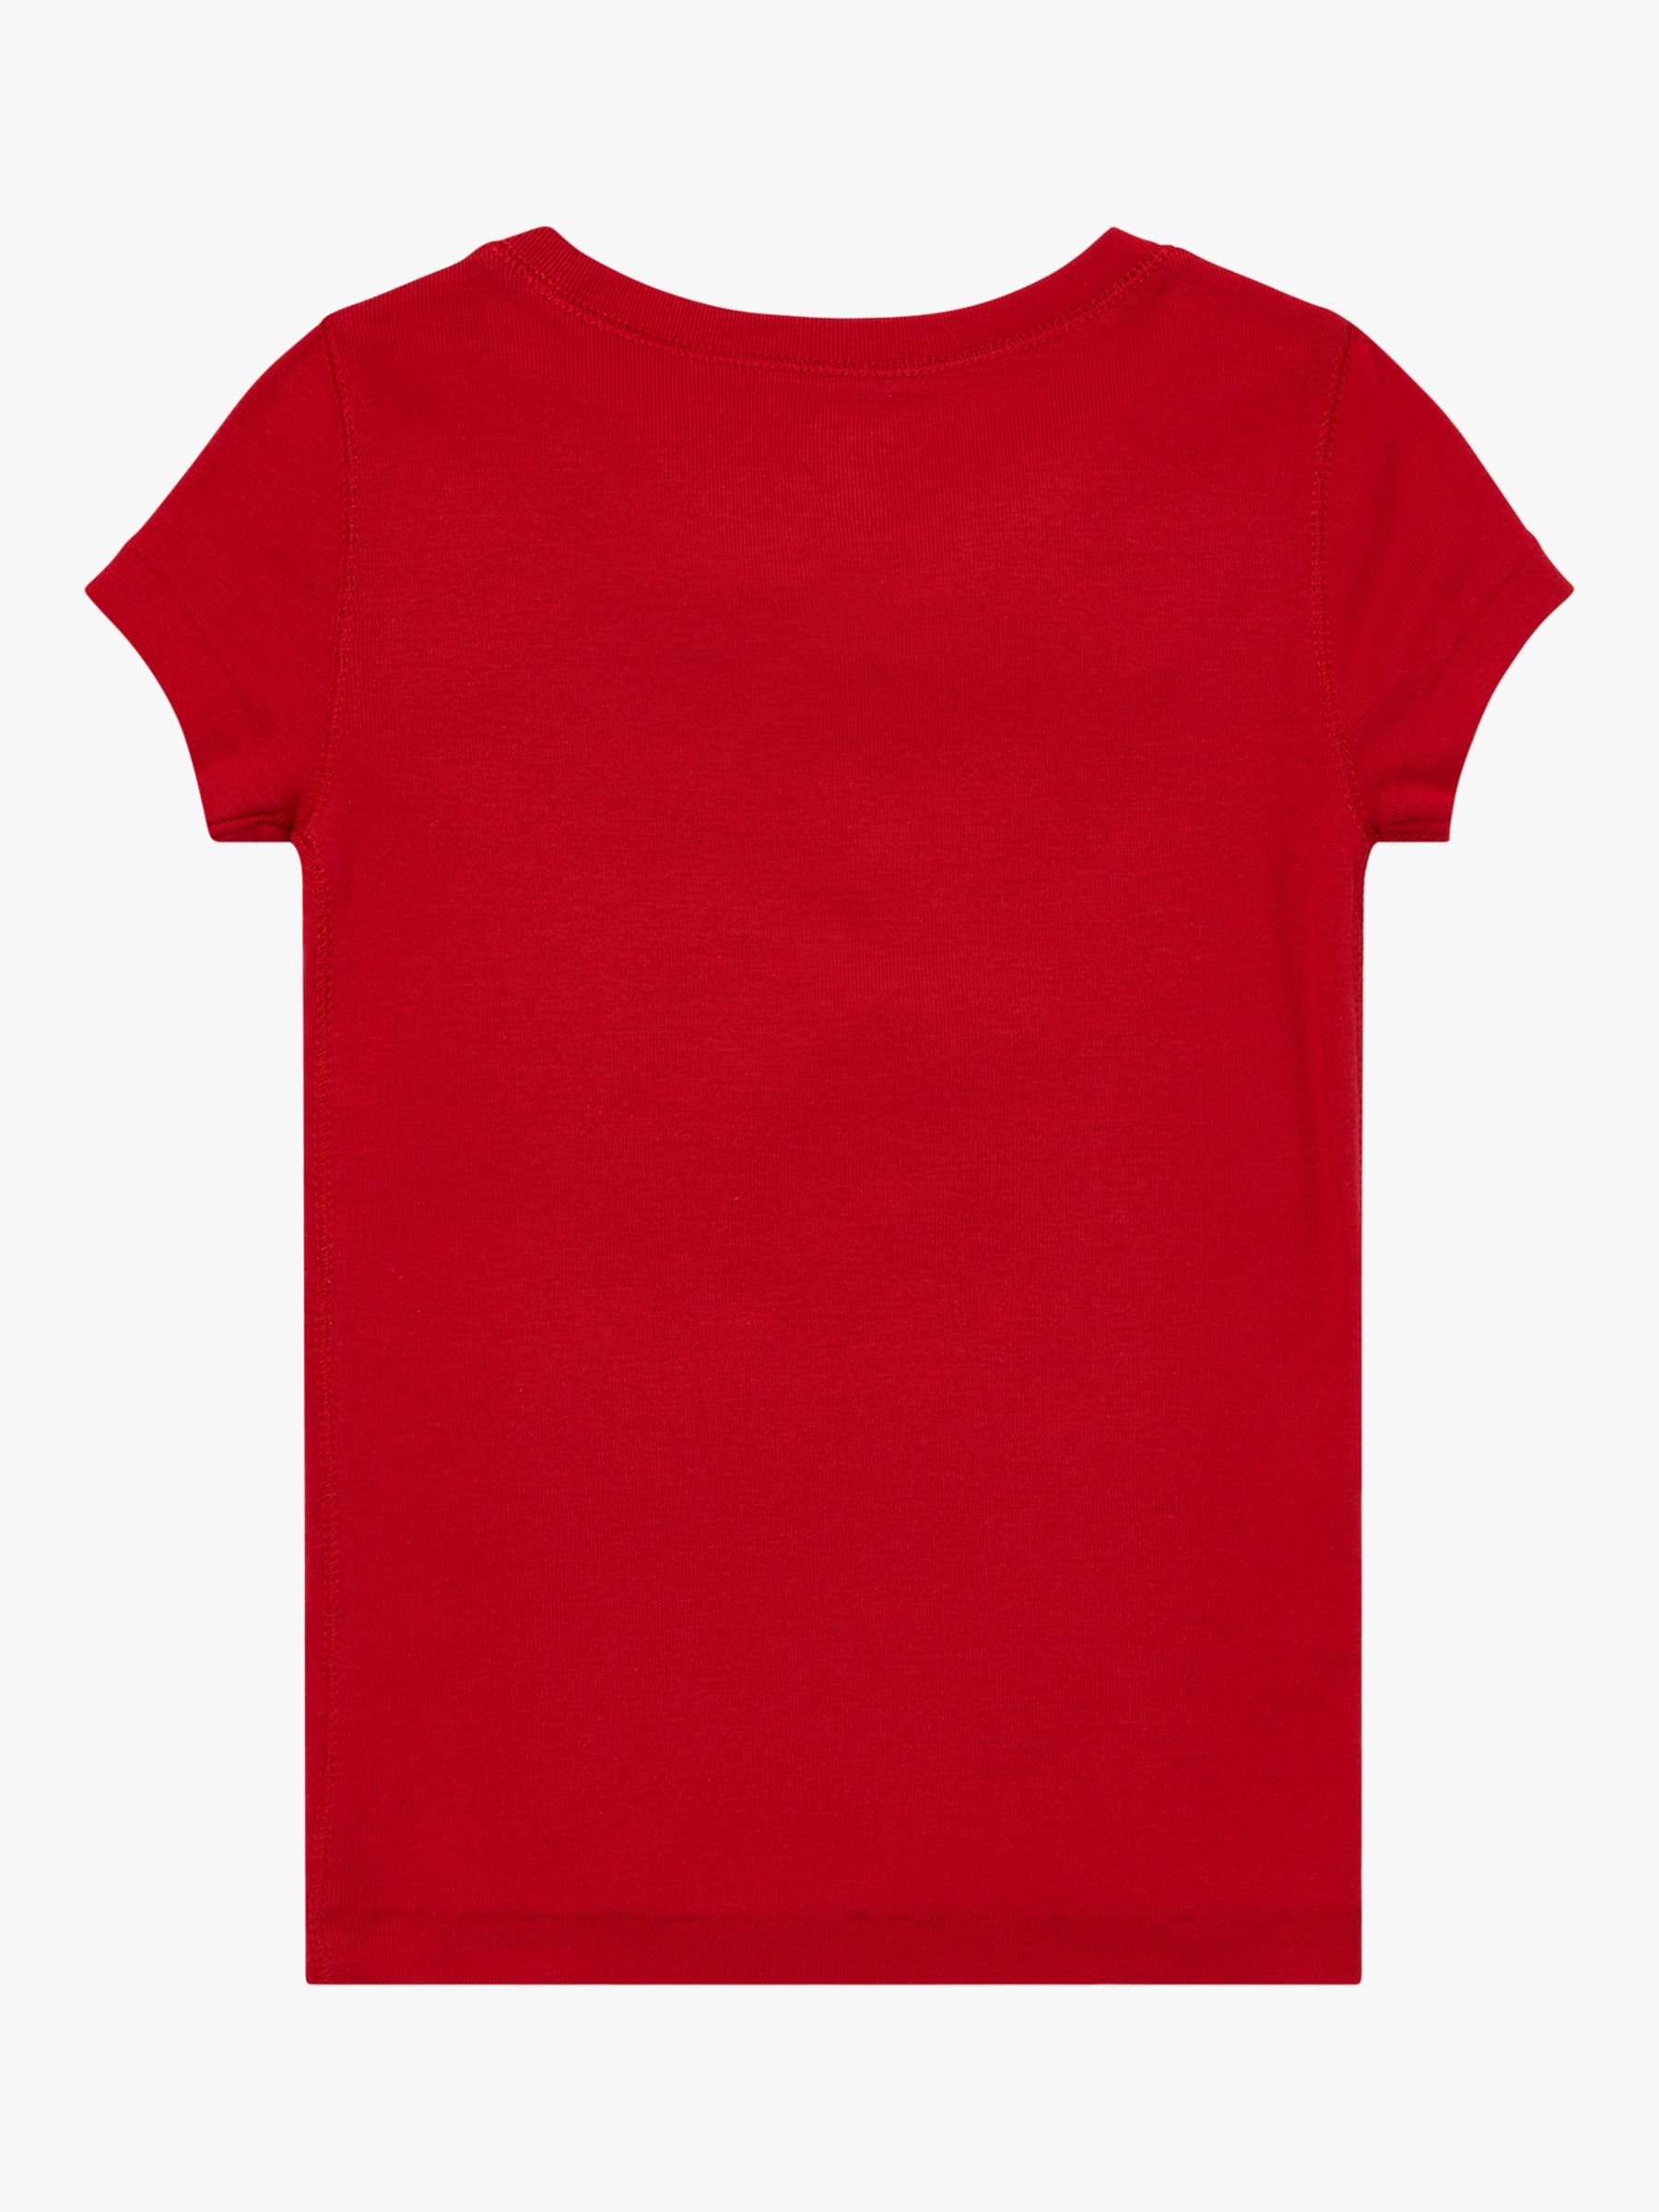 girls red shirt